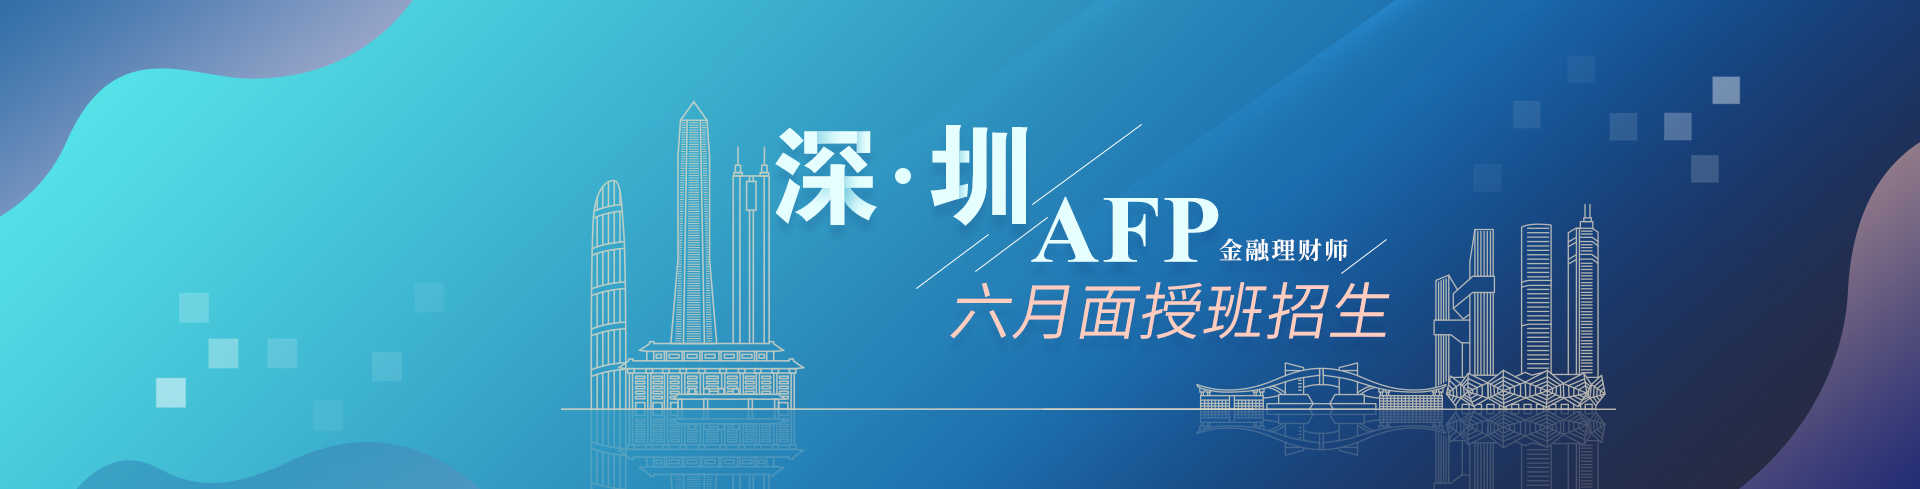 Banner_深圳AFP六月面授班招生.jpg